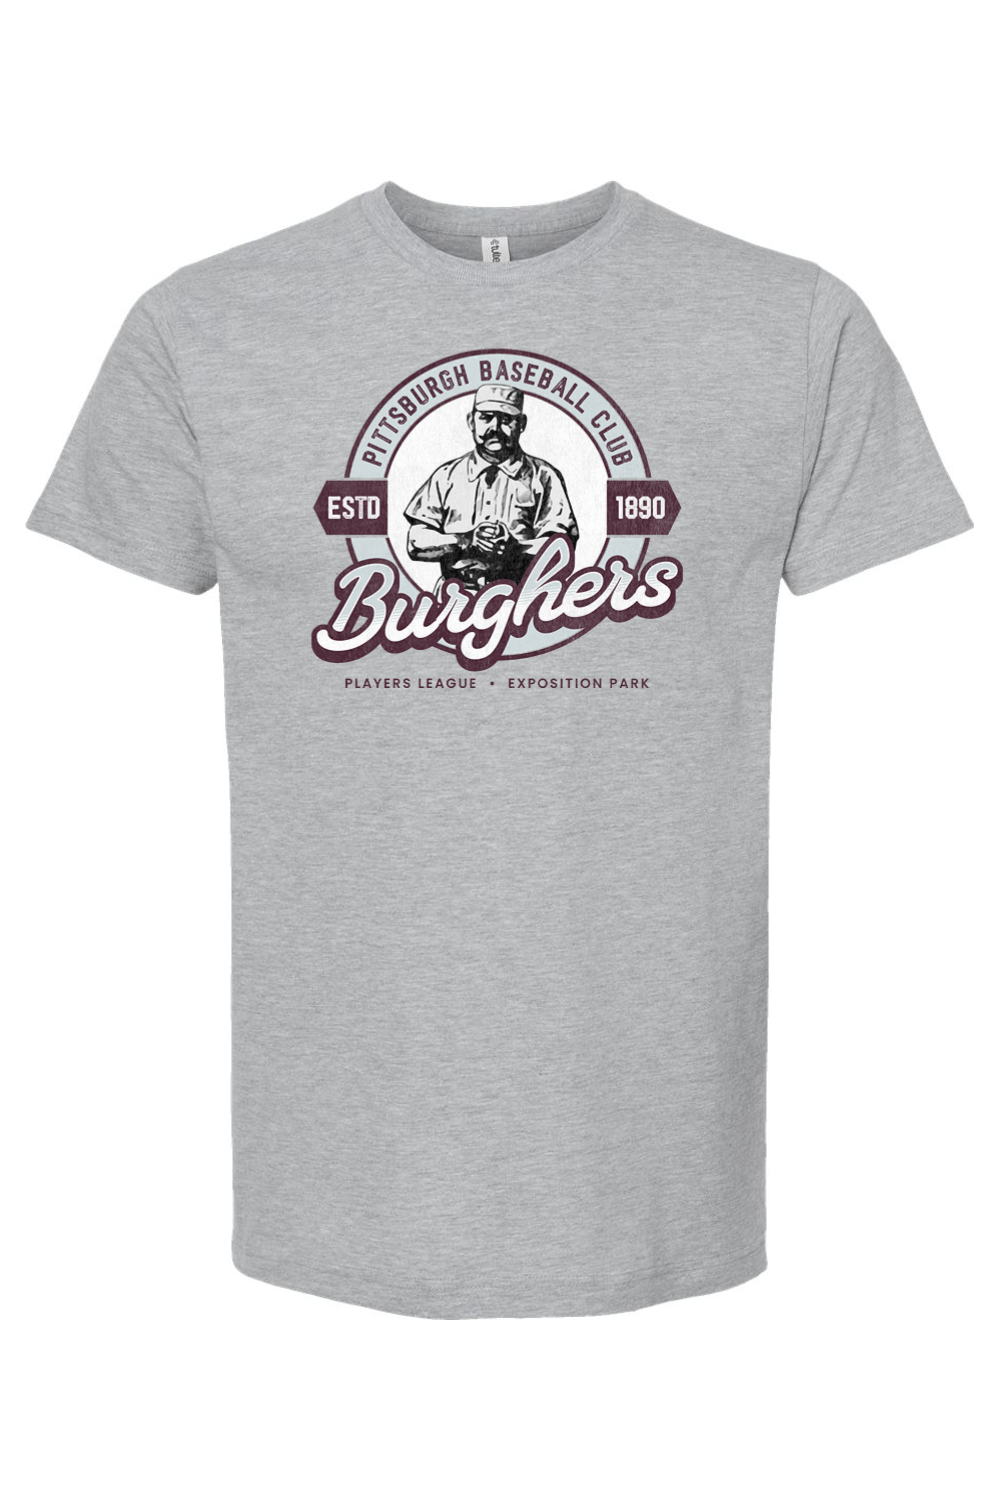 Pittsburgh Burghers Baseball - 1890 - Yinzylvania